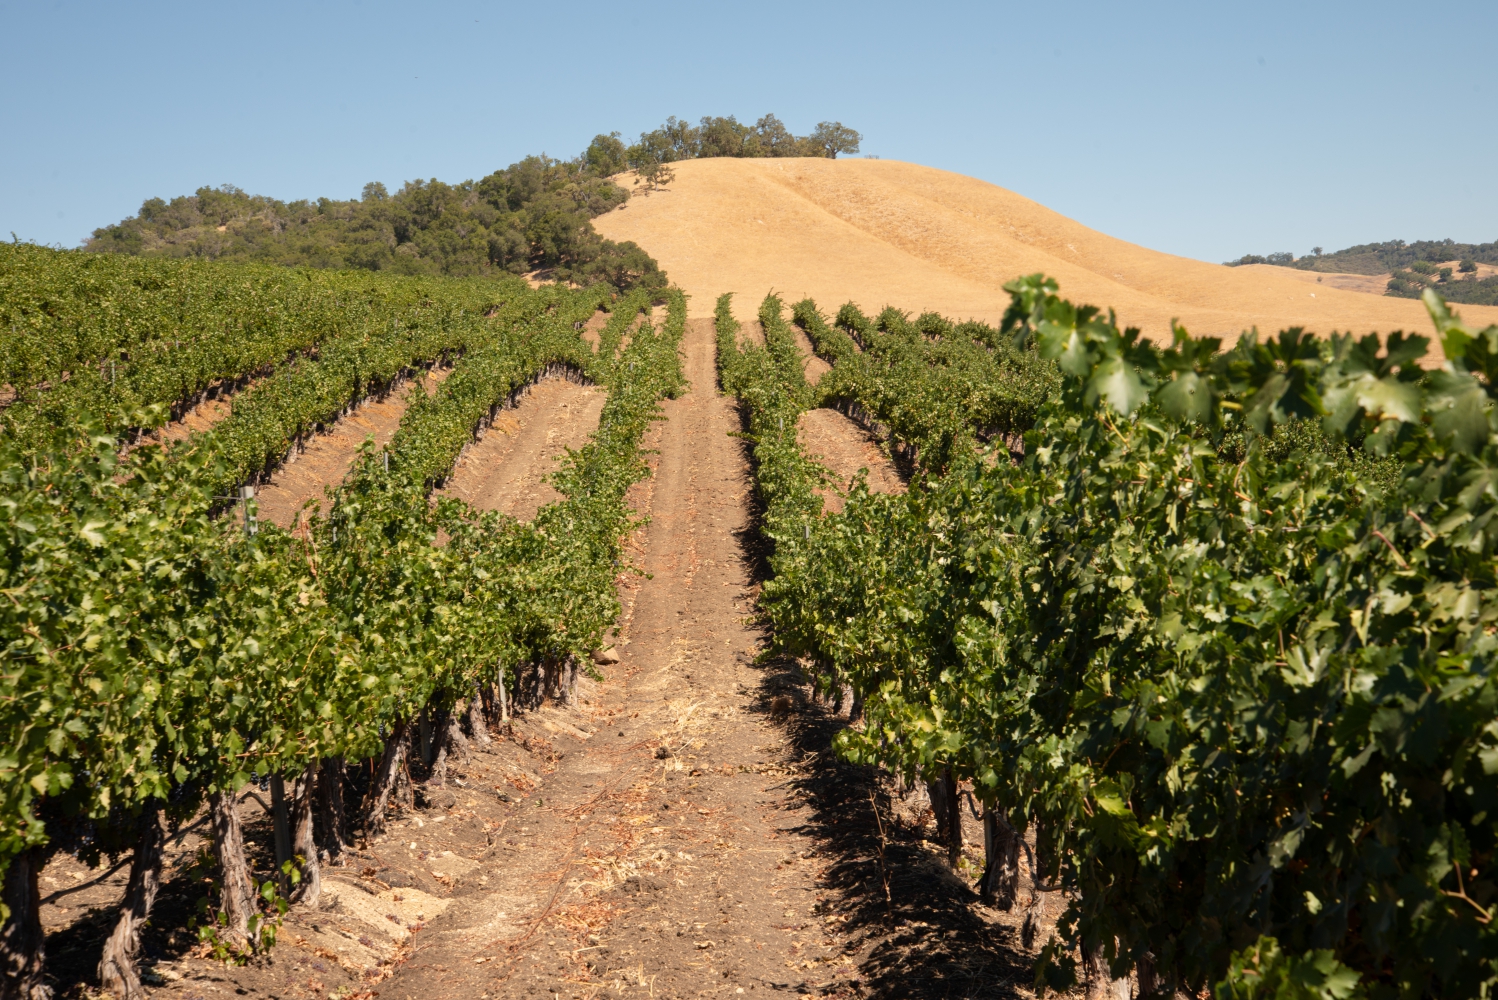 Vineyard sprawling over hills in summer.